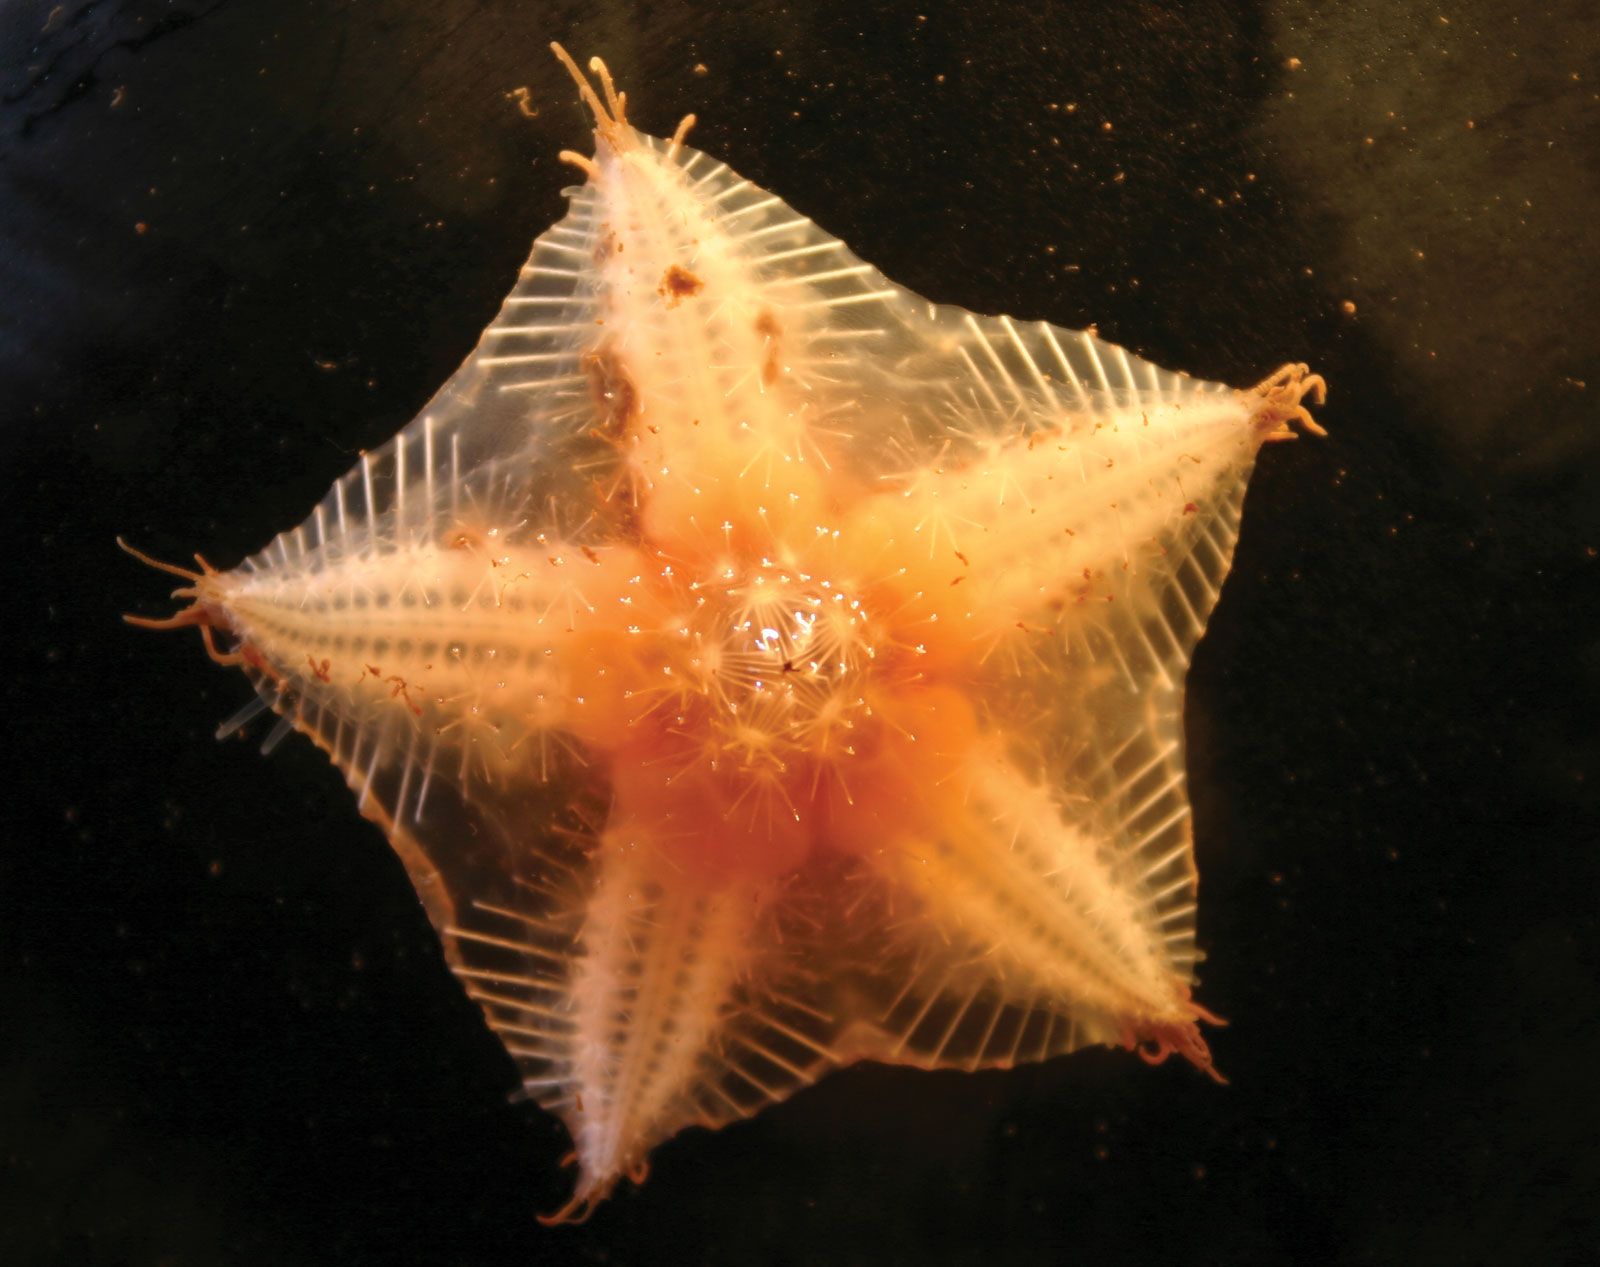 An Arctic sea star discovered on the floor of the deep sea.